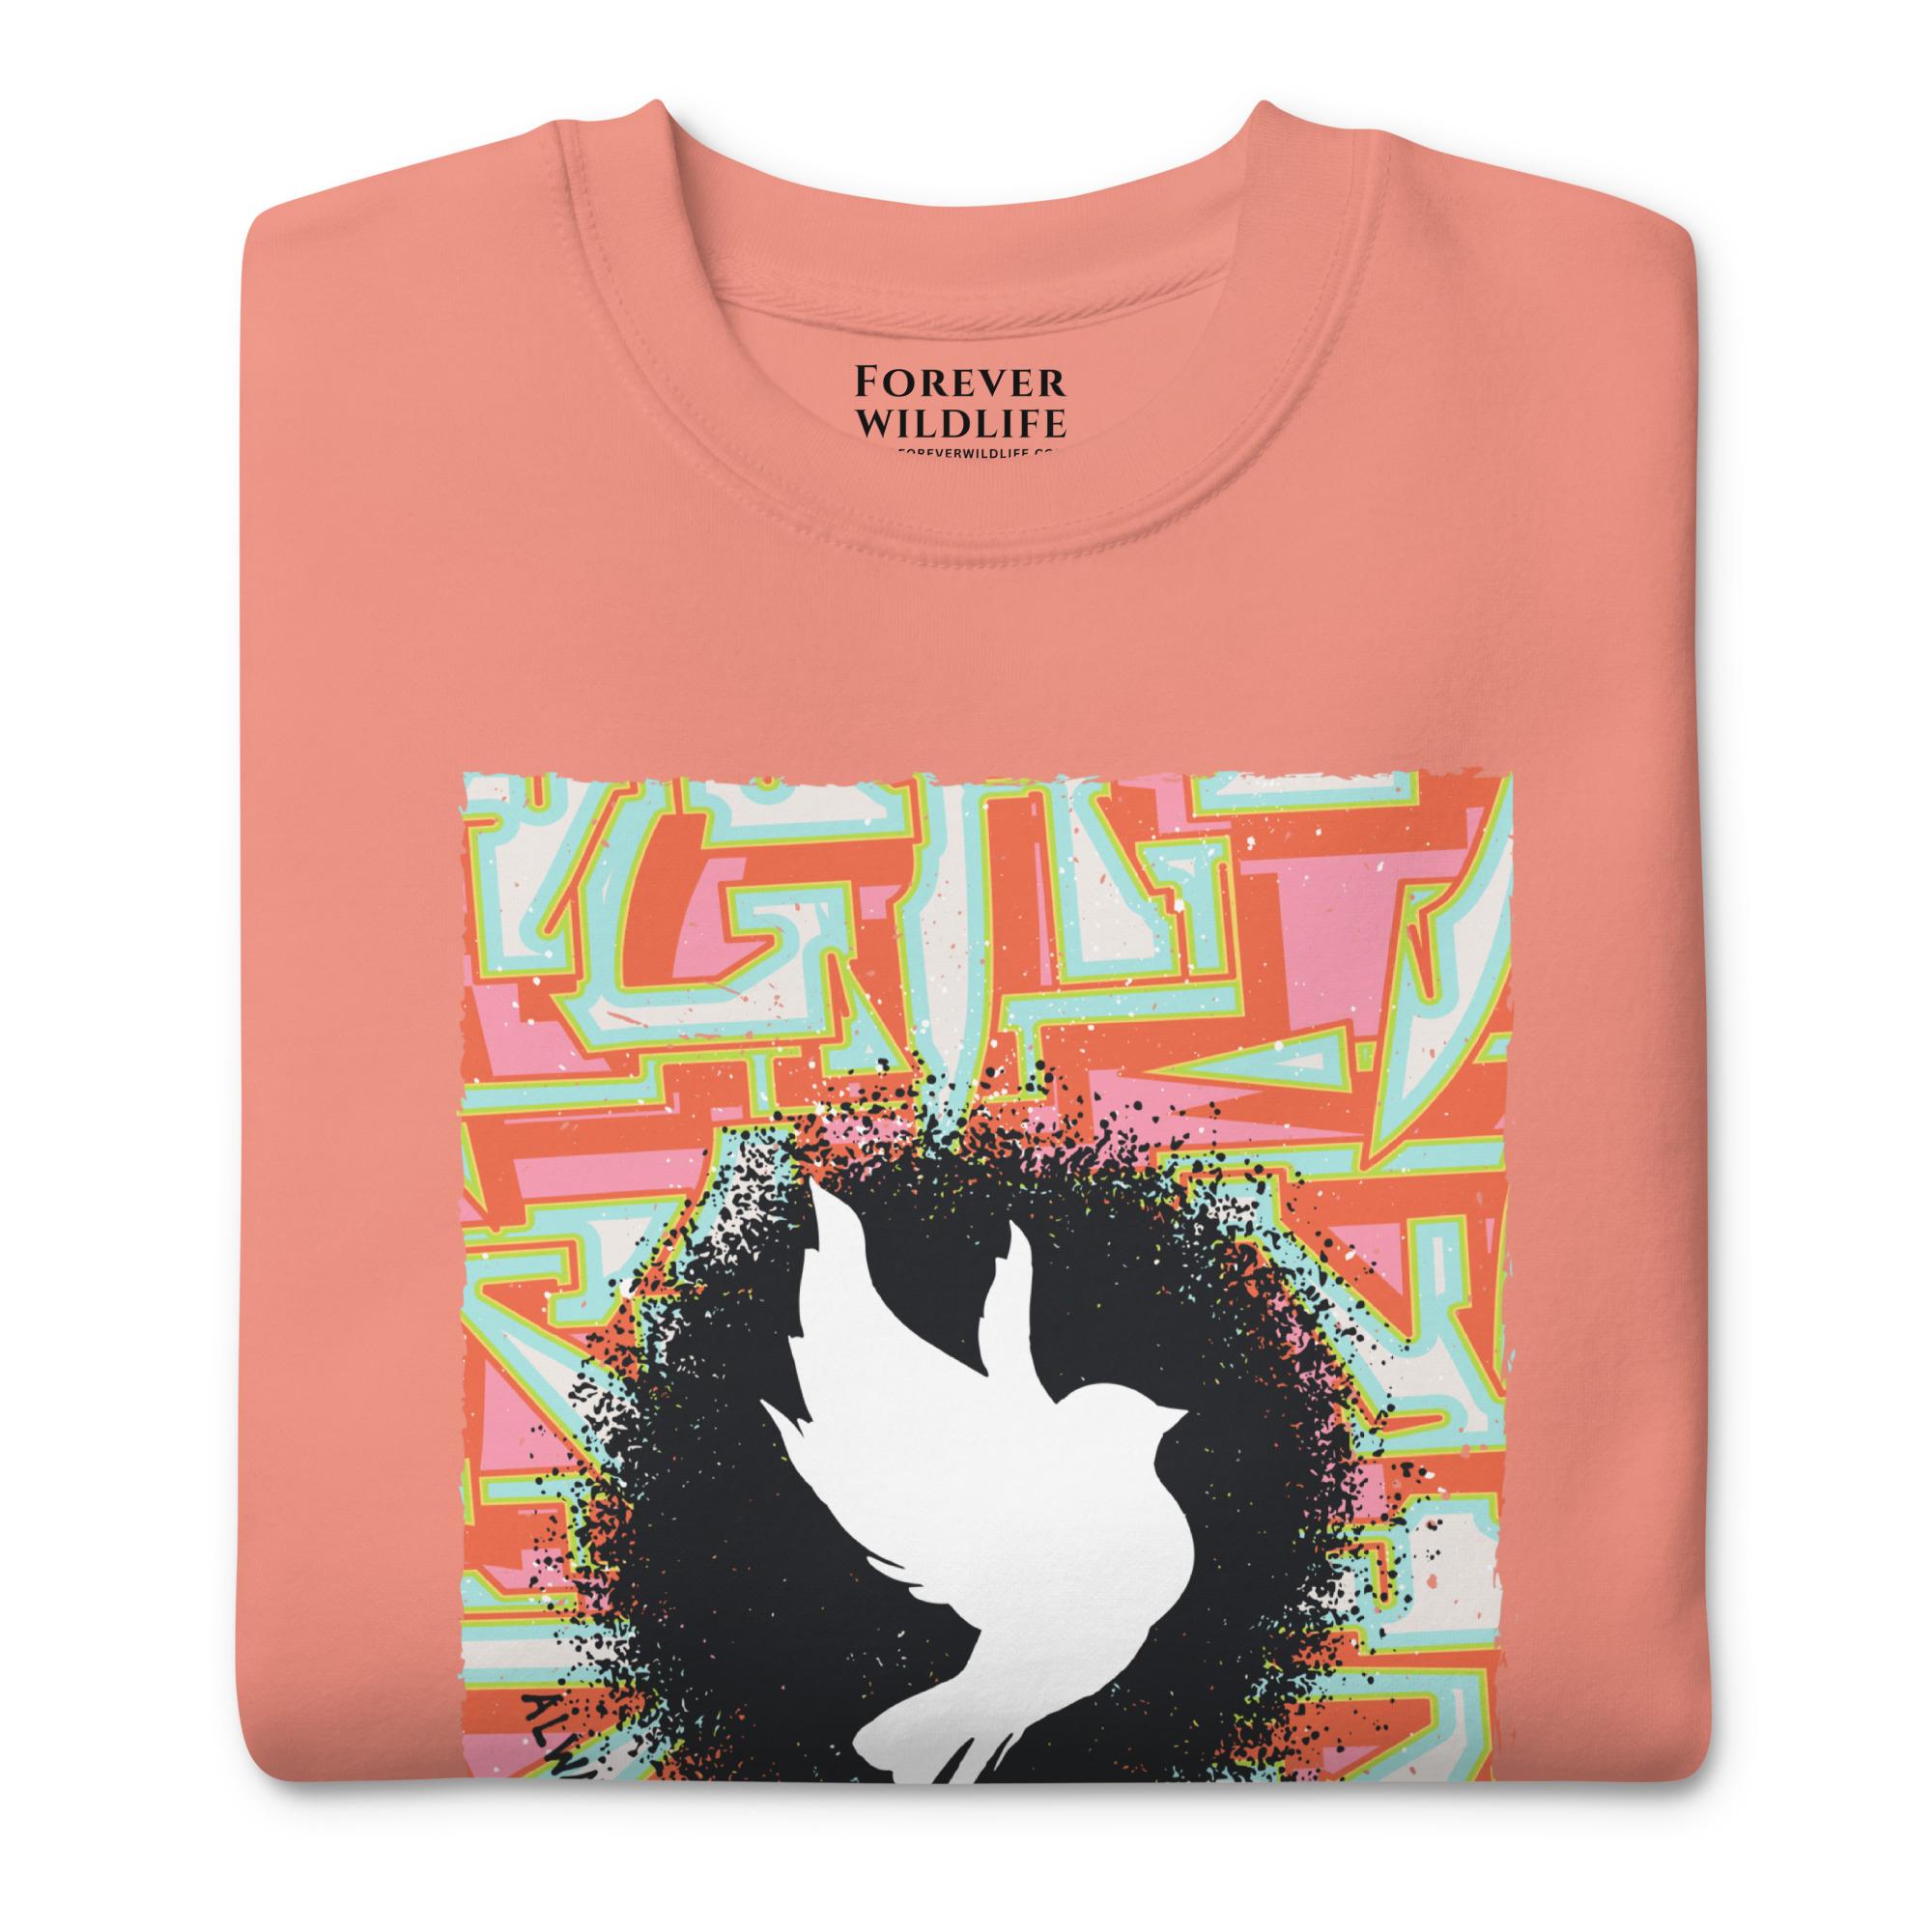 Dove Sweatshirt in Rose-Premium Wildlife Animal Inspiration Sweatshirt Design with 'Always Follow Your Dreams' text, part of Wildlife Sweatshirts & Clothing from Forever Wildlife.